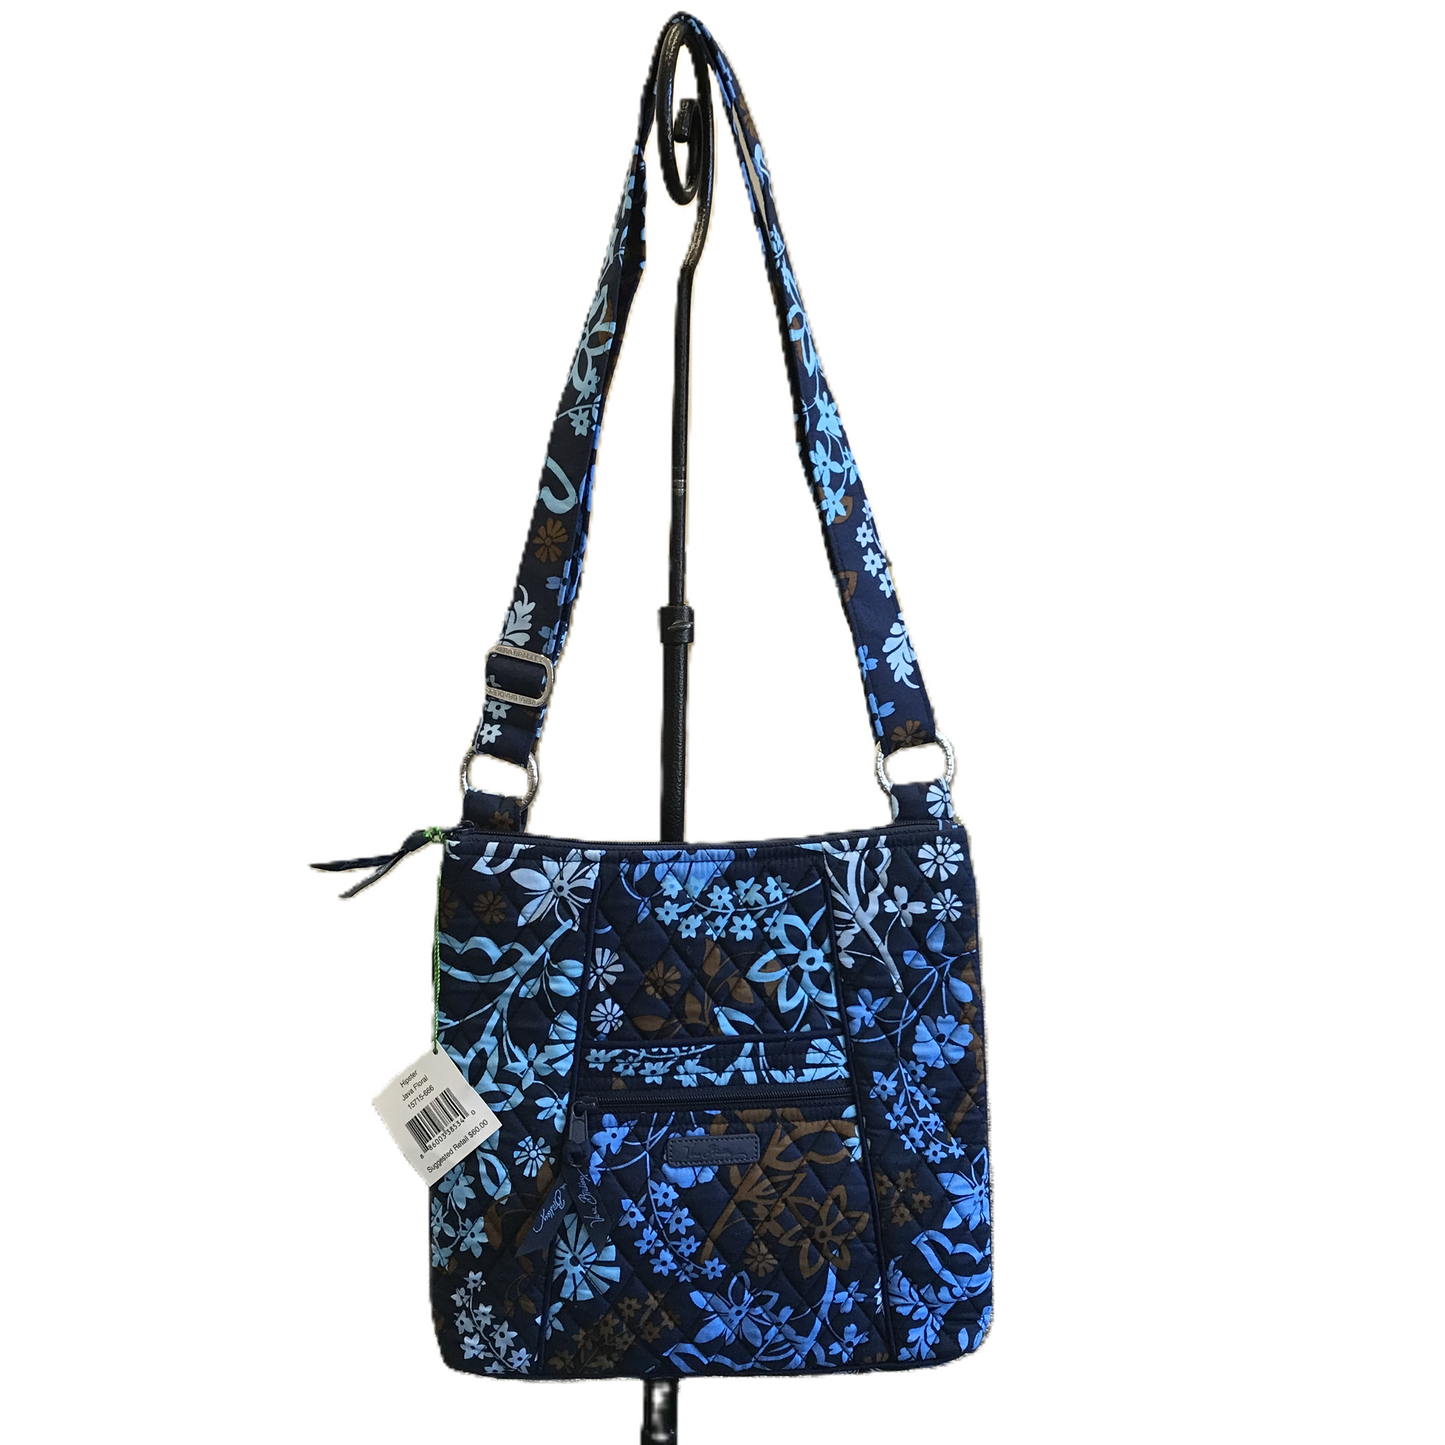 Handbag By Vera Bradley, Size: Medium